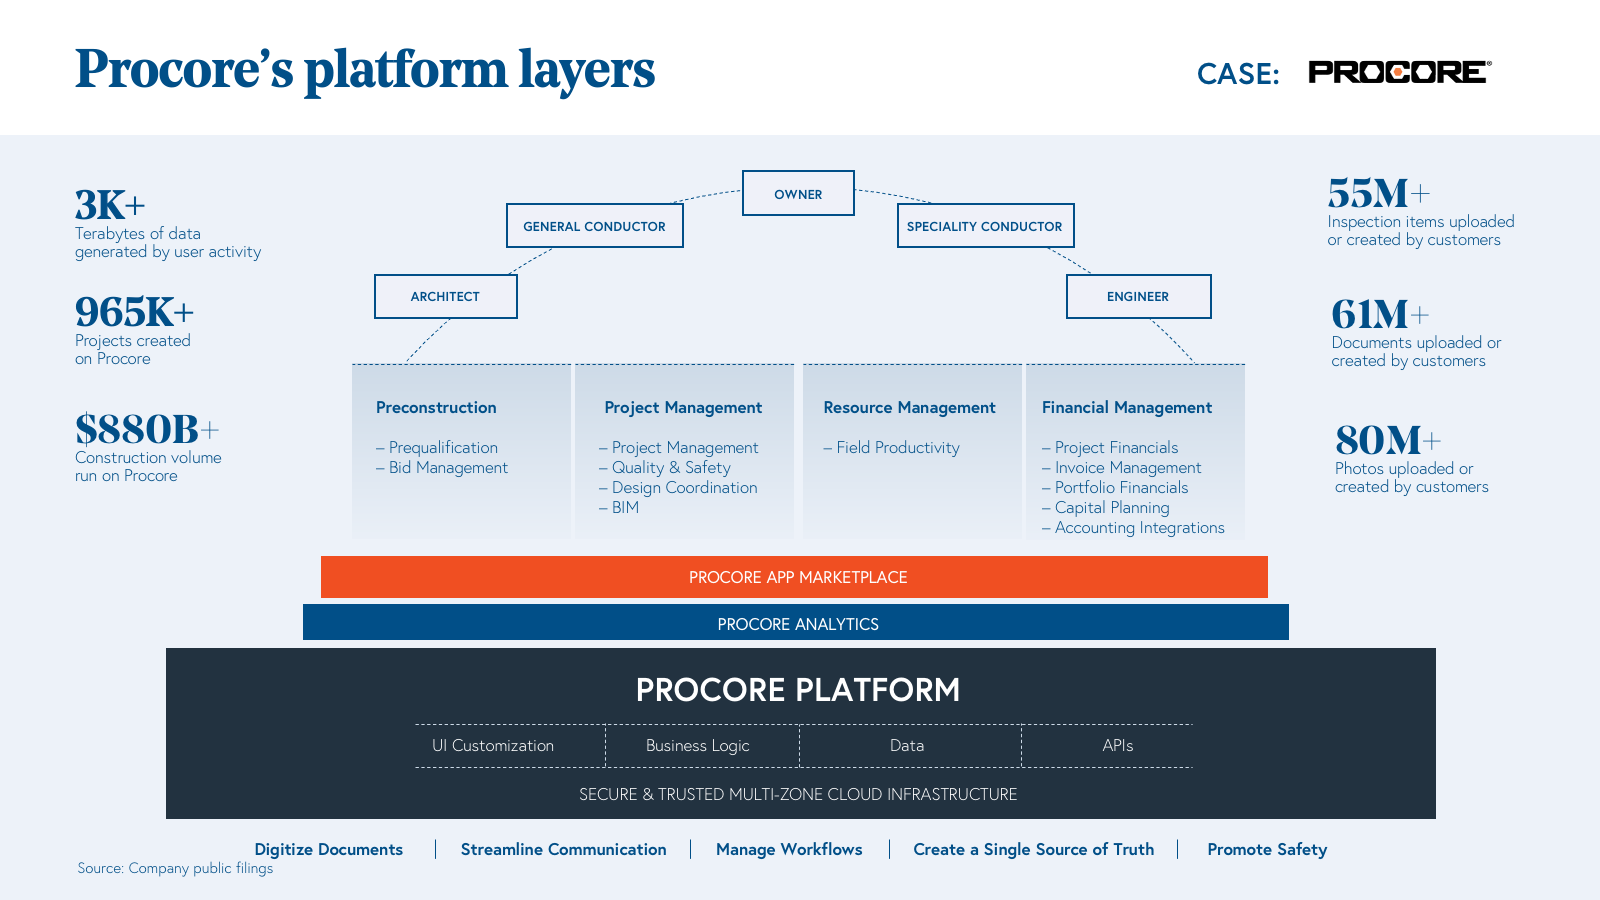 Procore's platform layers